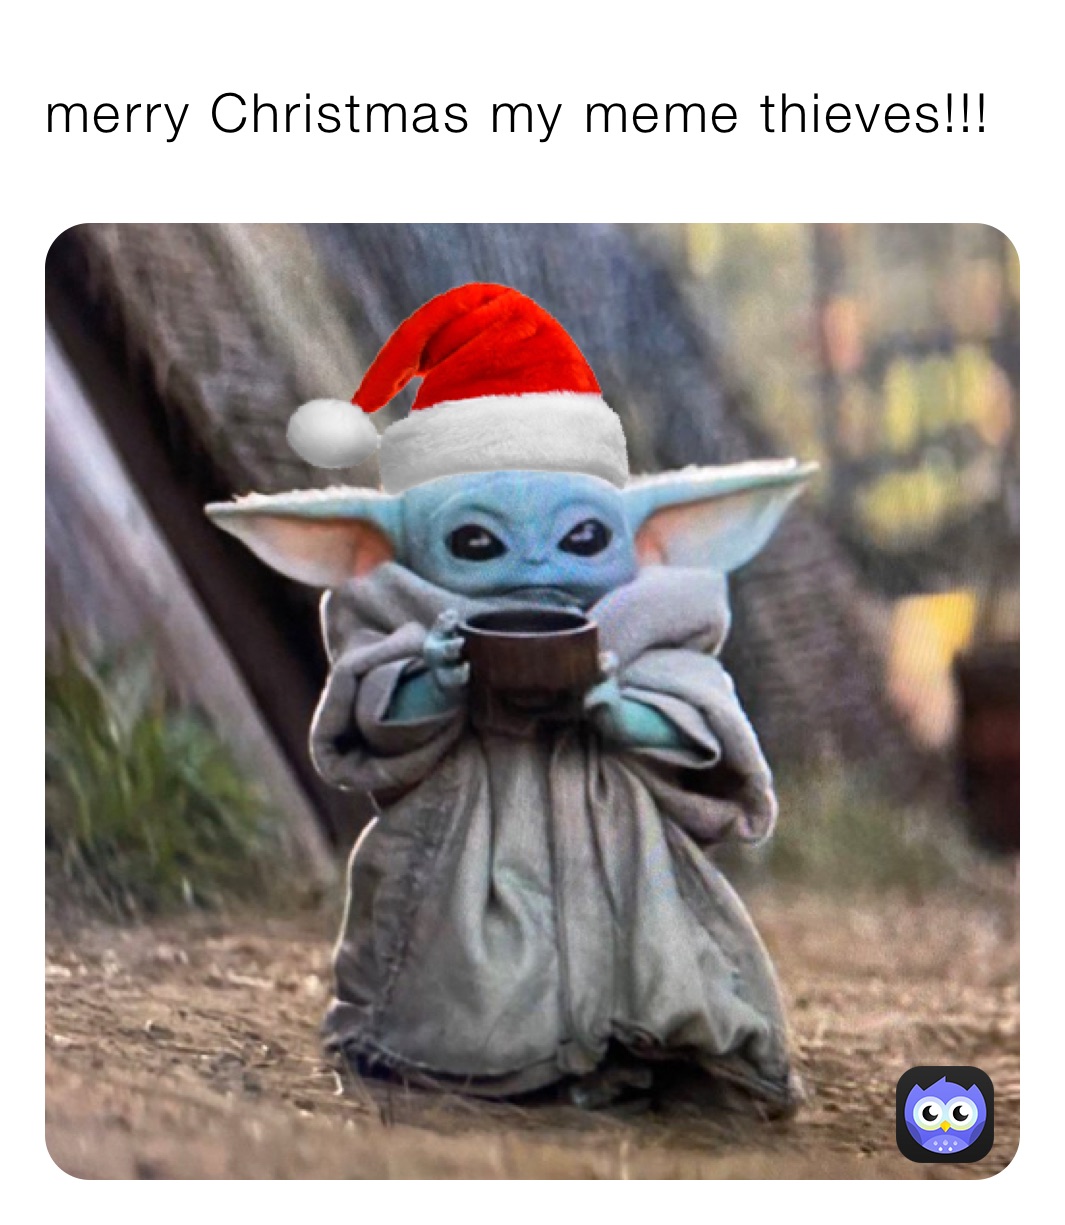 merry Christmas my meme thieves!!!